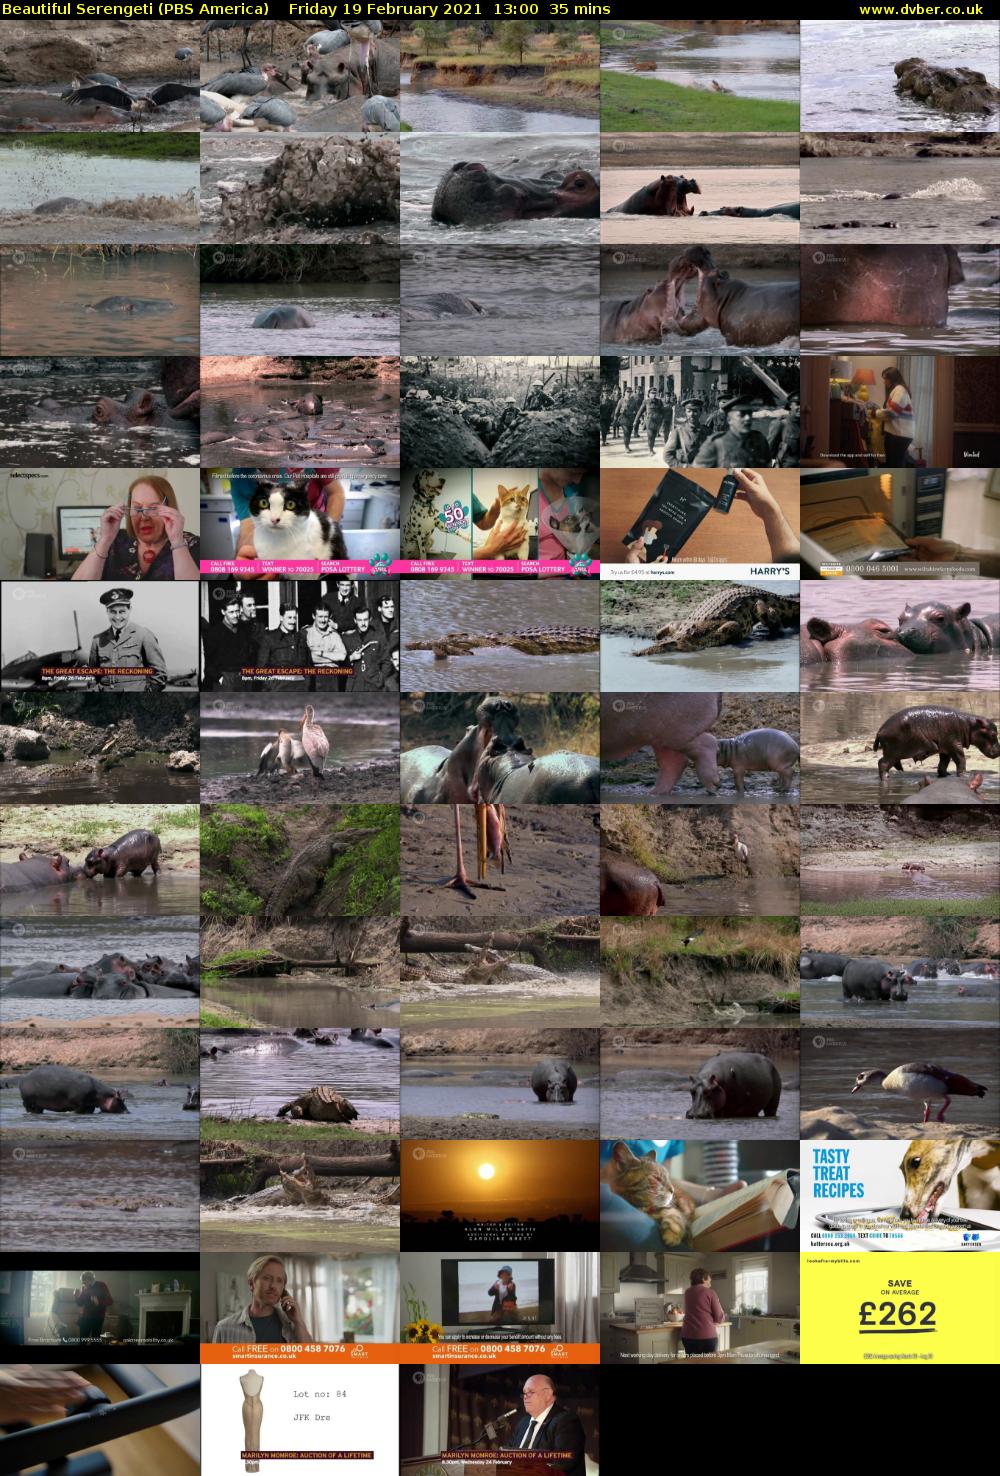 Beautiful Serengeti (PBS America) Friday 19 February 2021 13:00 - 13:35